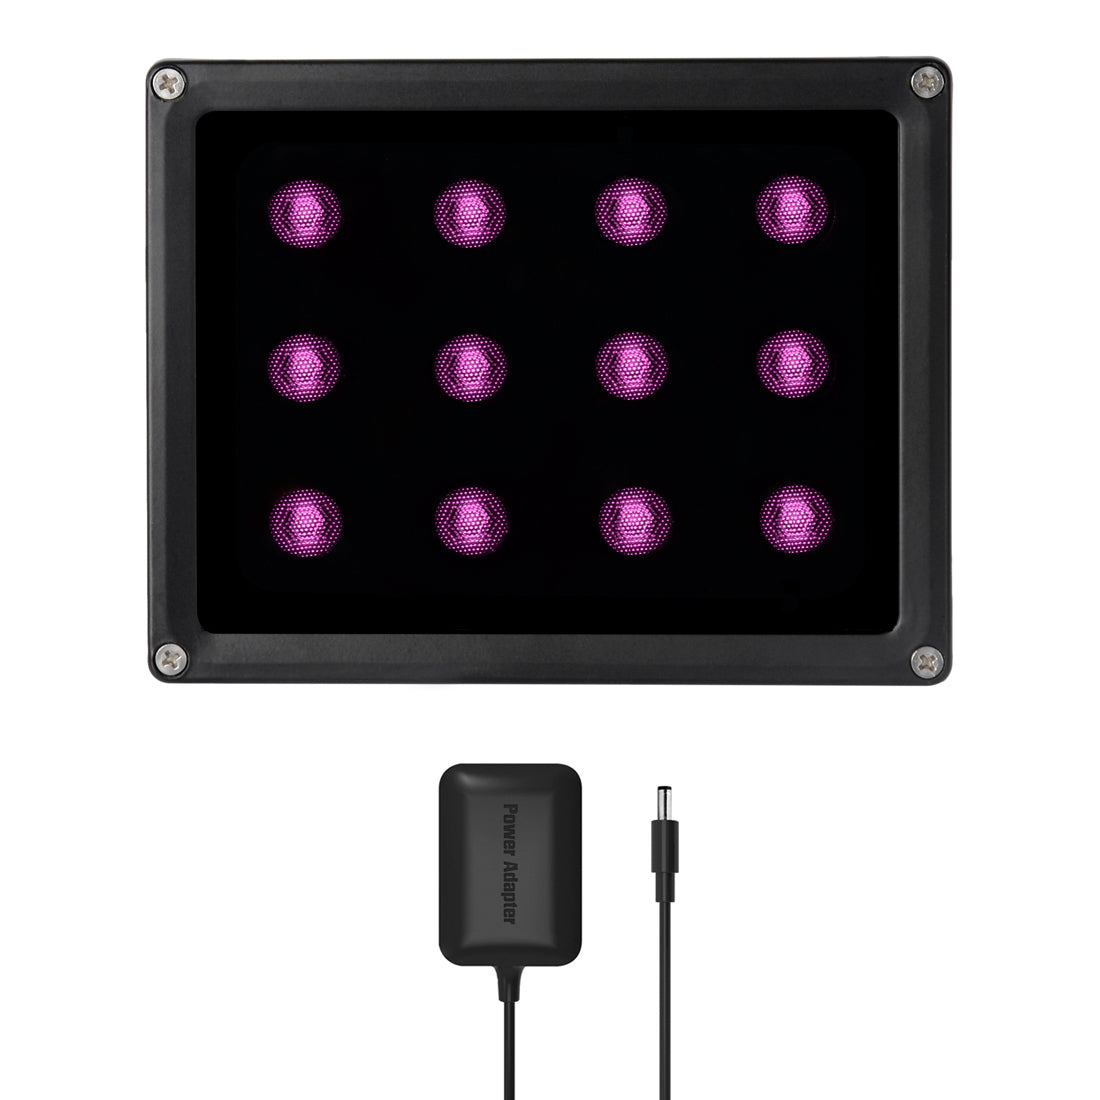 Tendelux BI12 IR Illuminator, 12W LED Infrared Flood Light for Security Cameras / License Plate Capturing